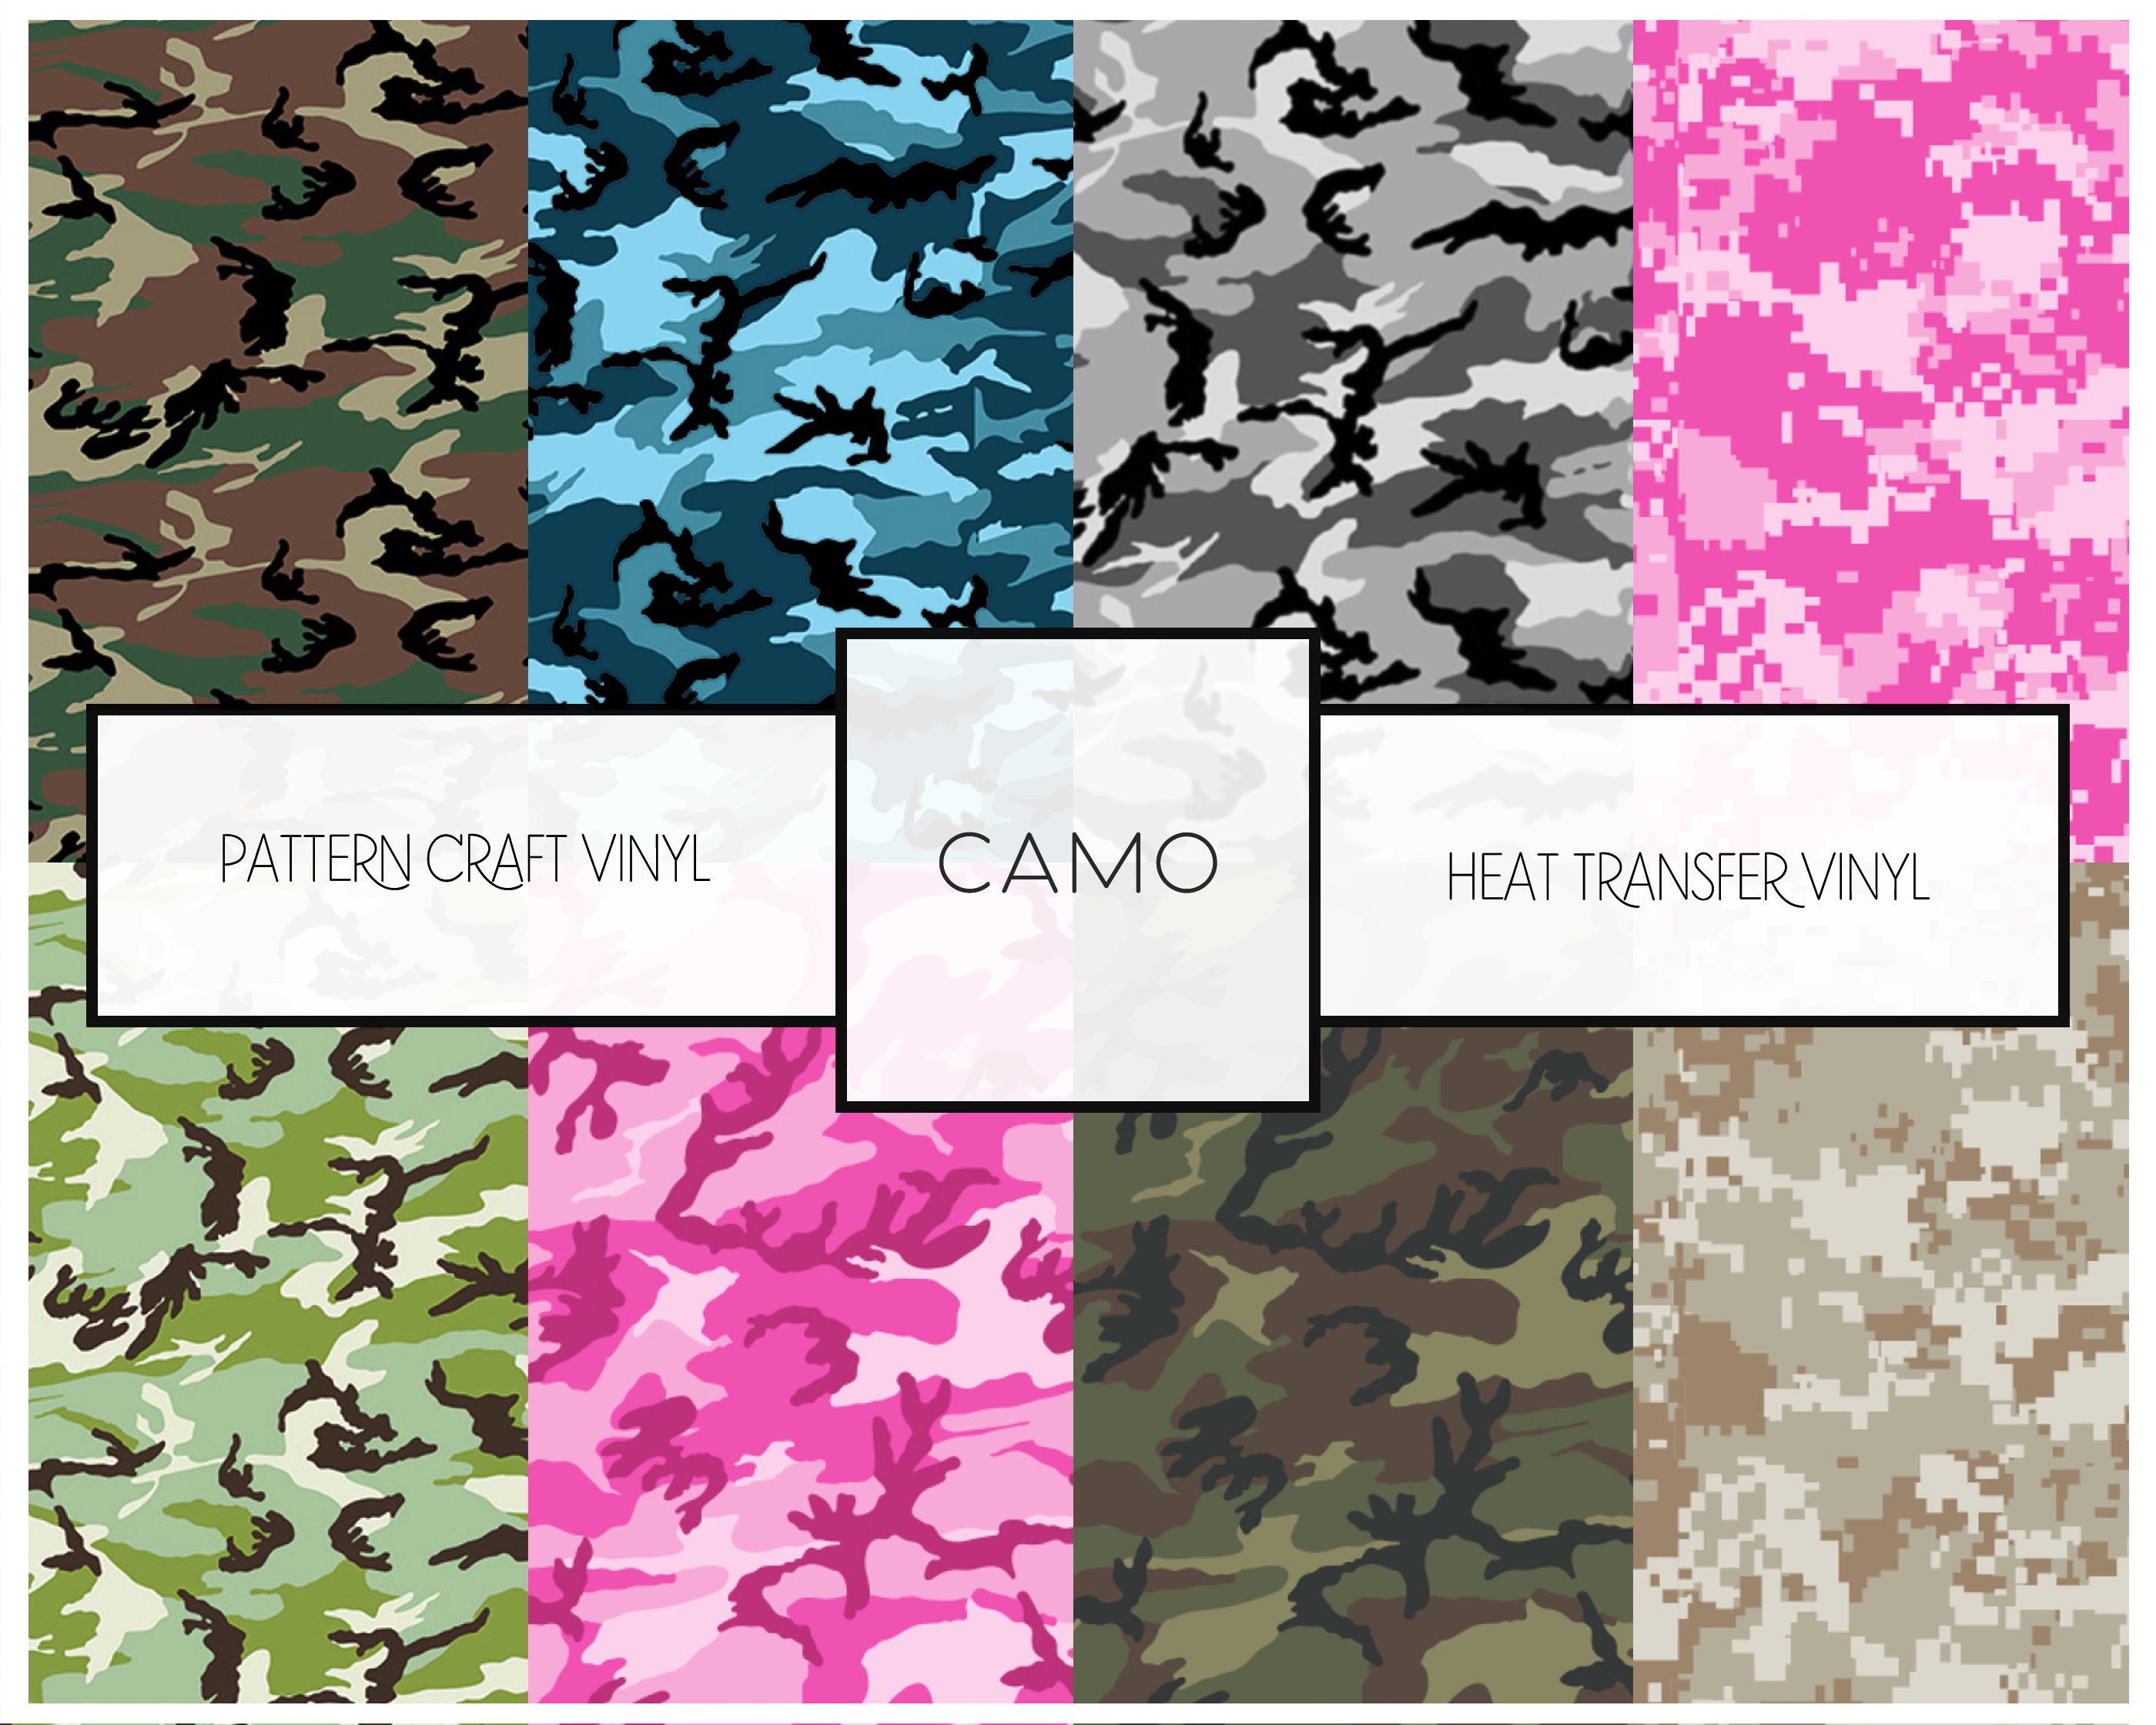 6 Pcs Camo Stencils for Spray Paint Reusable Camouflage Grass Bark Tiger Stripe